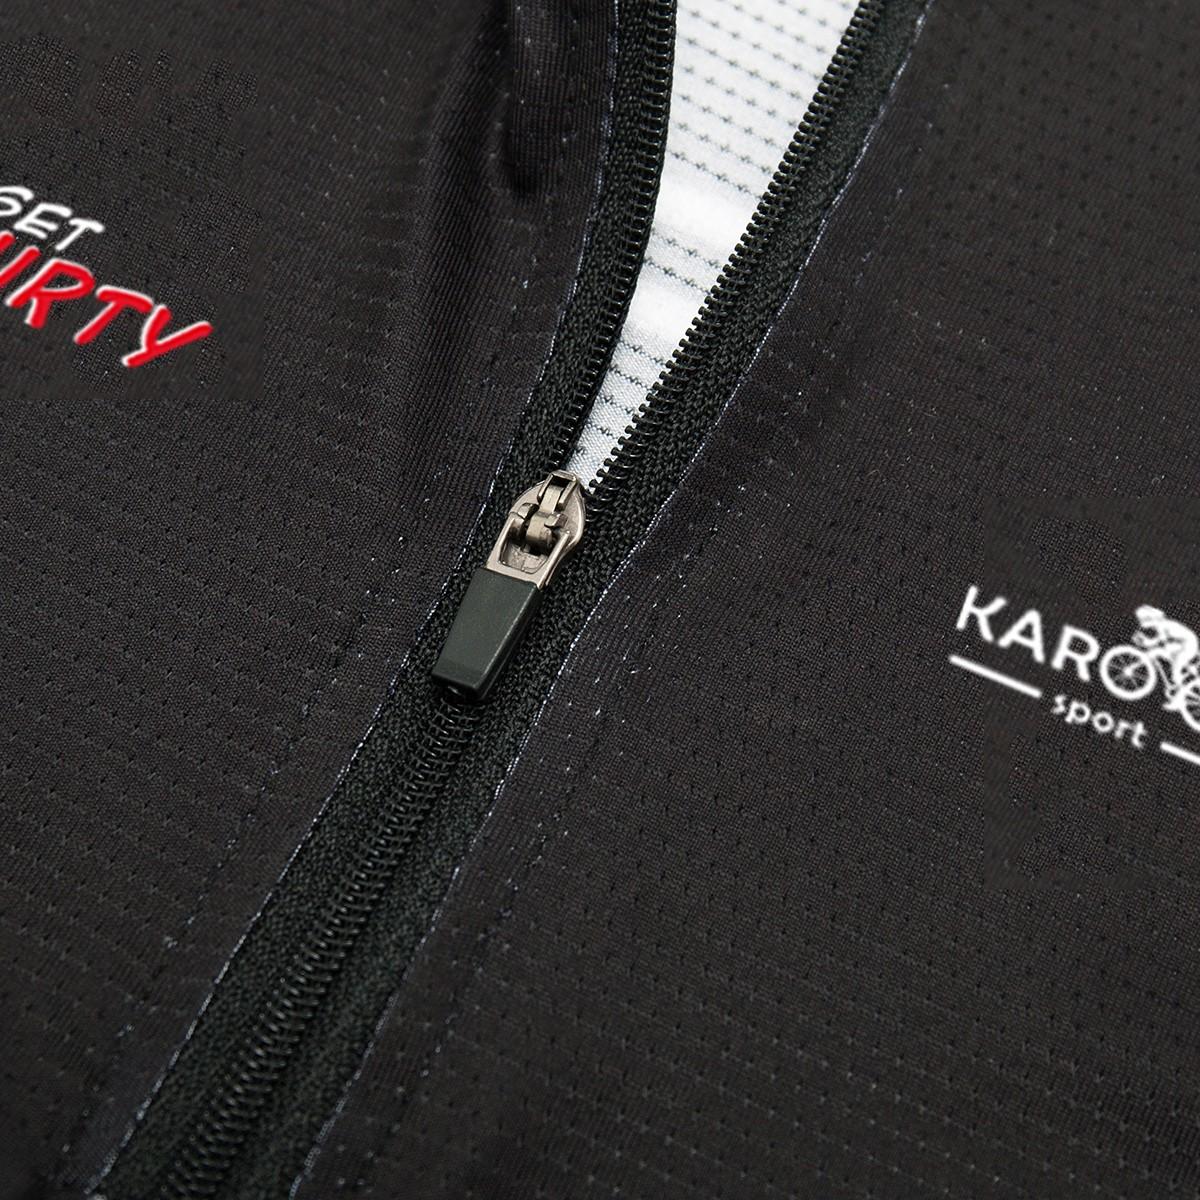 Karool light weight mens running tops customized for short run-2